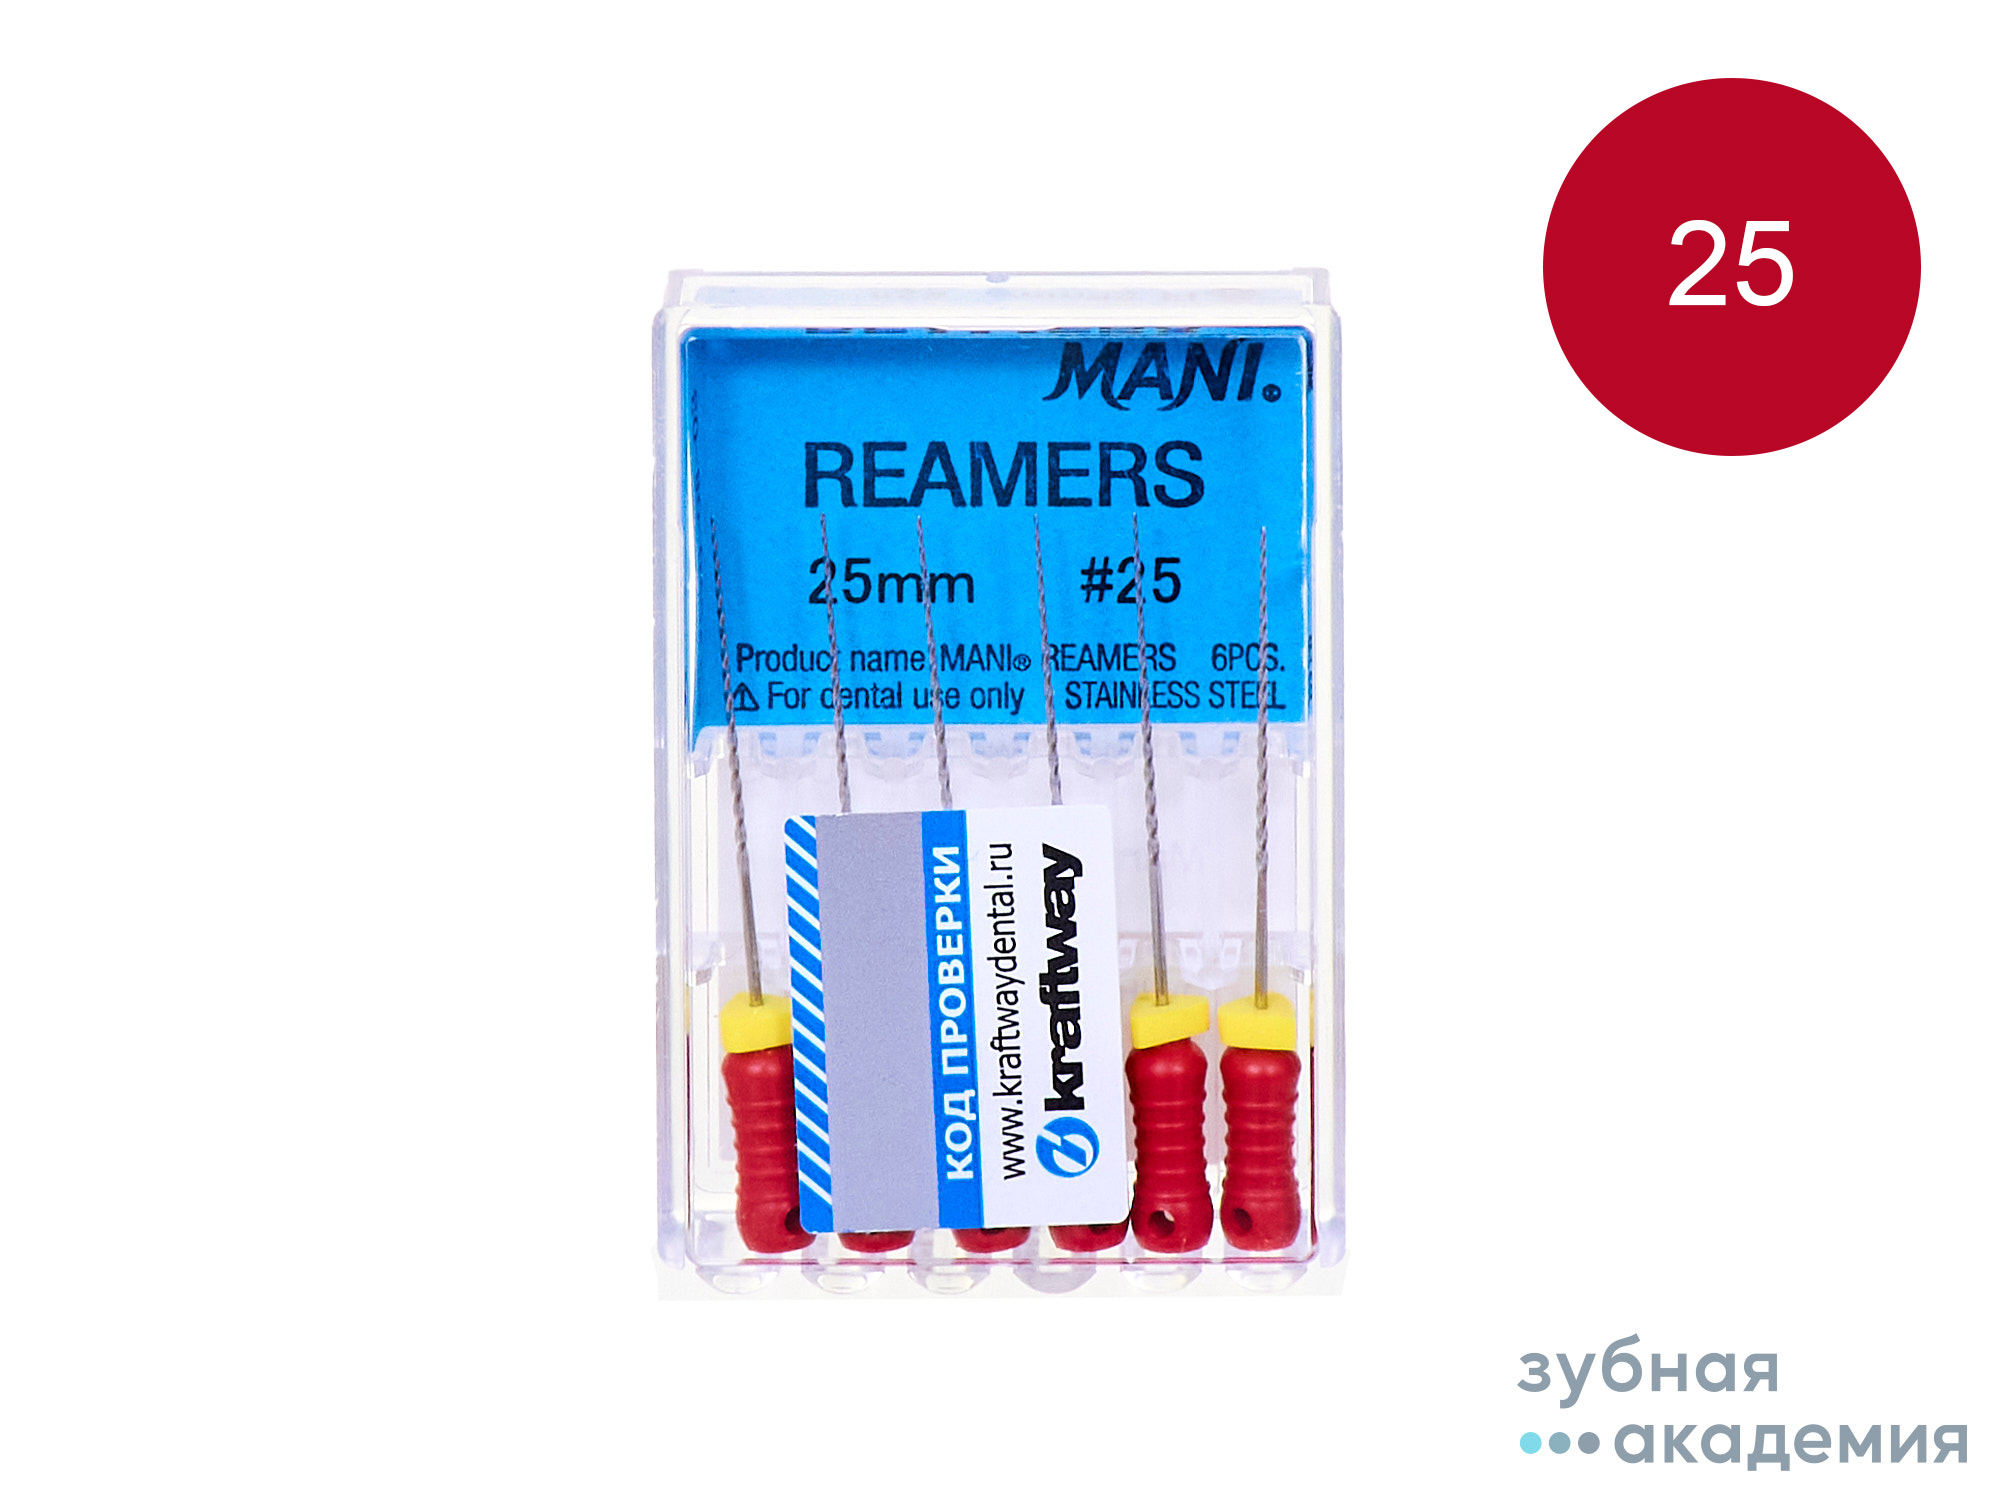 Reamers Римеры № 25 L25 упаковка 6шт  /Mani/ Япония